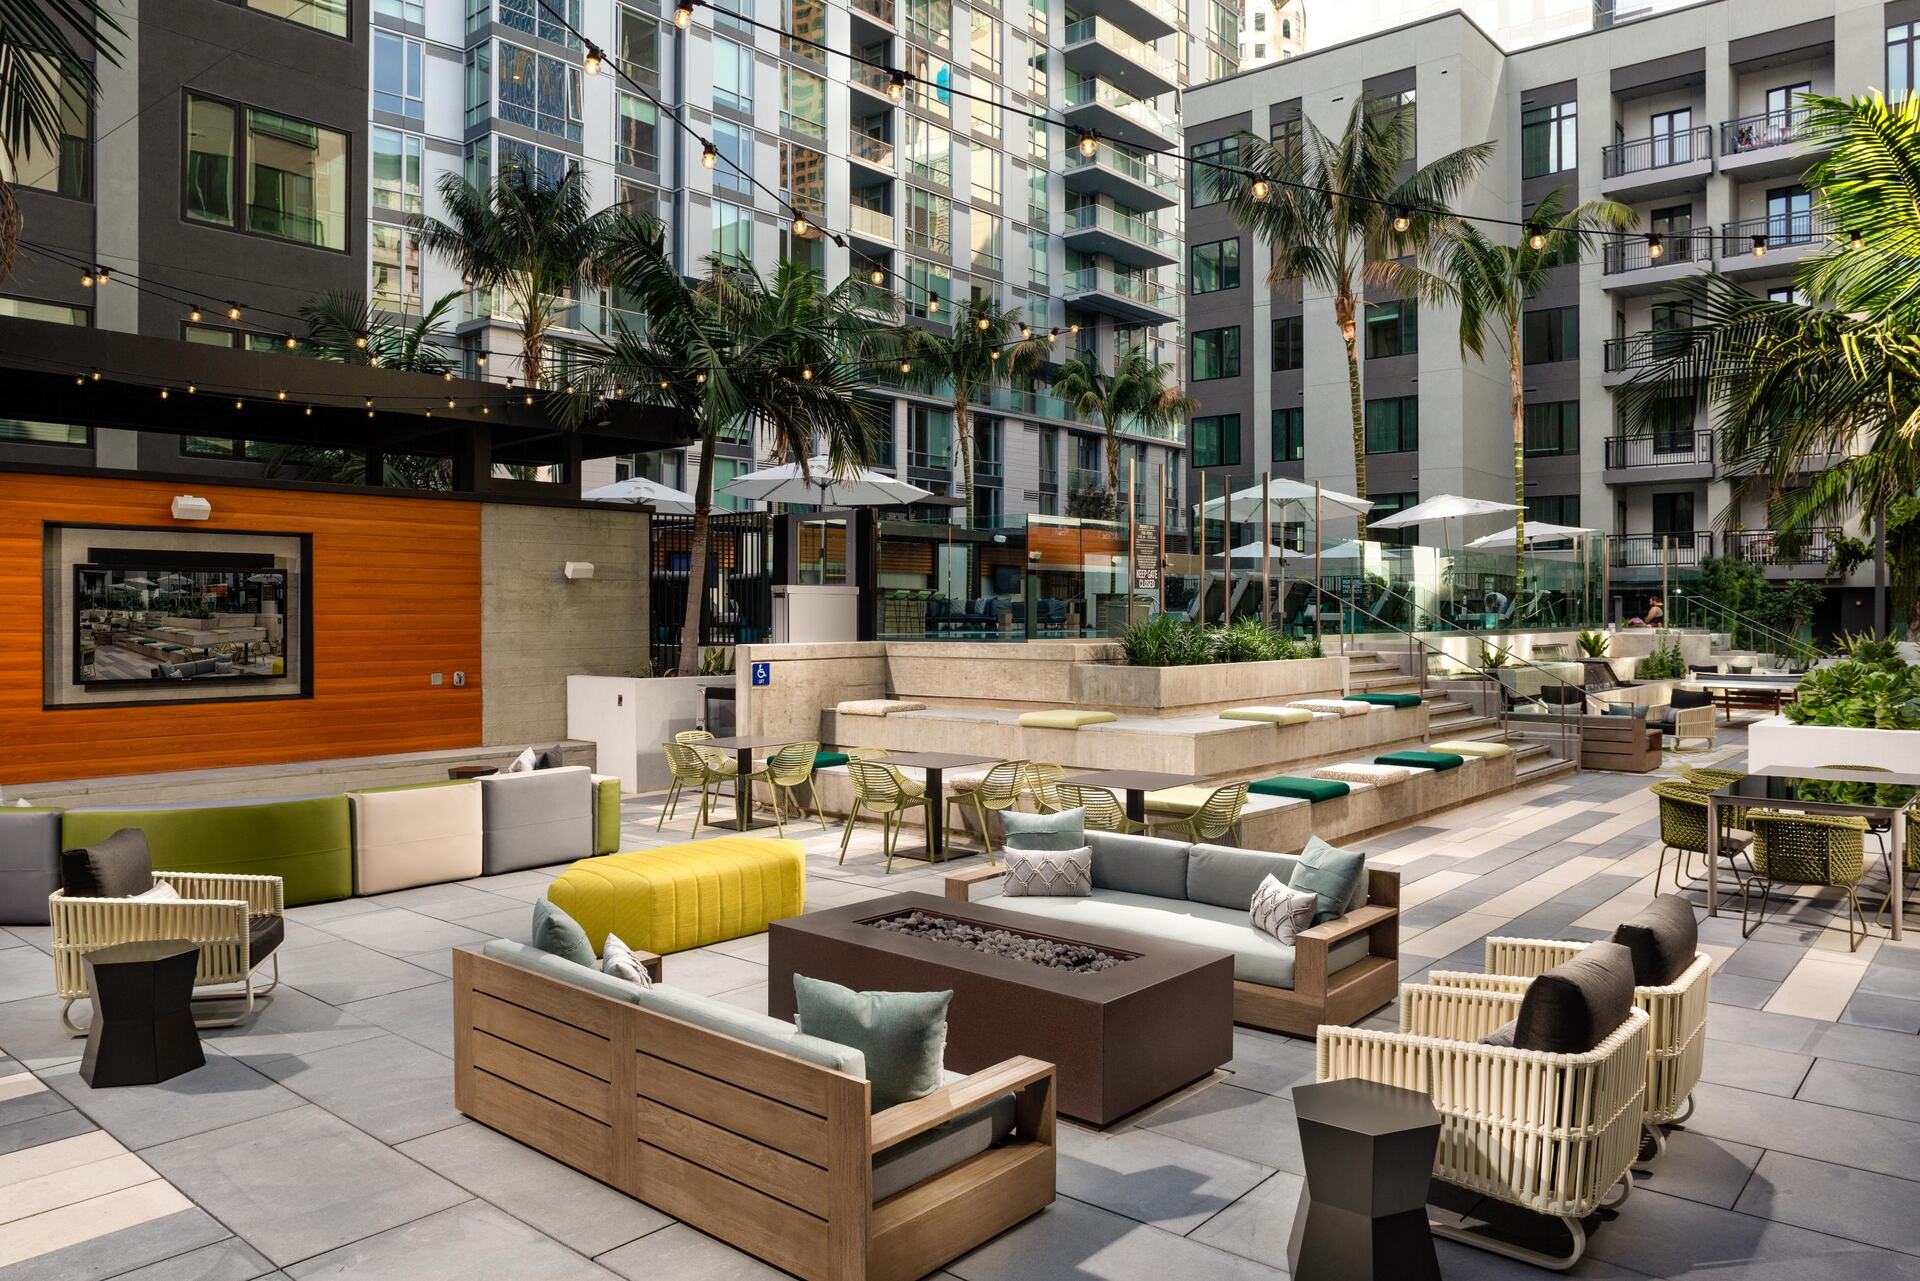 Resort-style outdoor entertainment courtyard